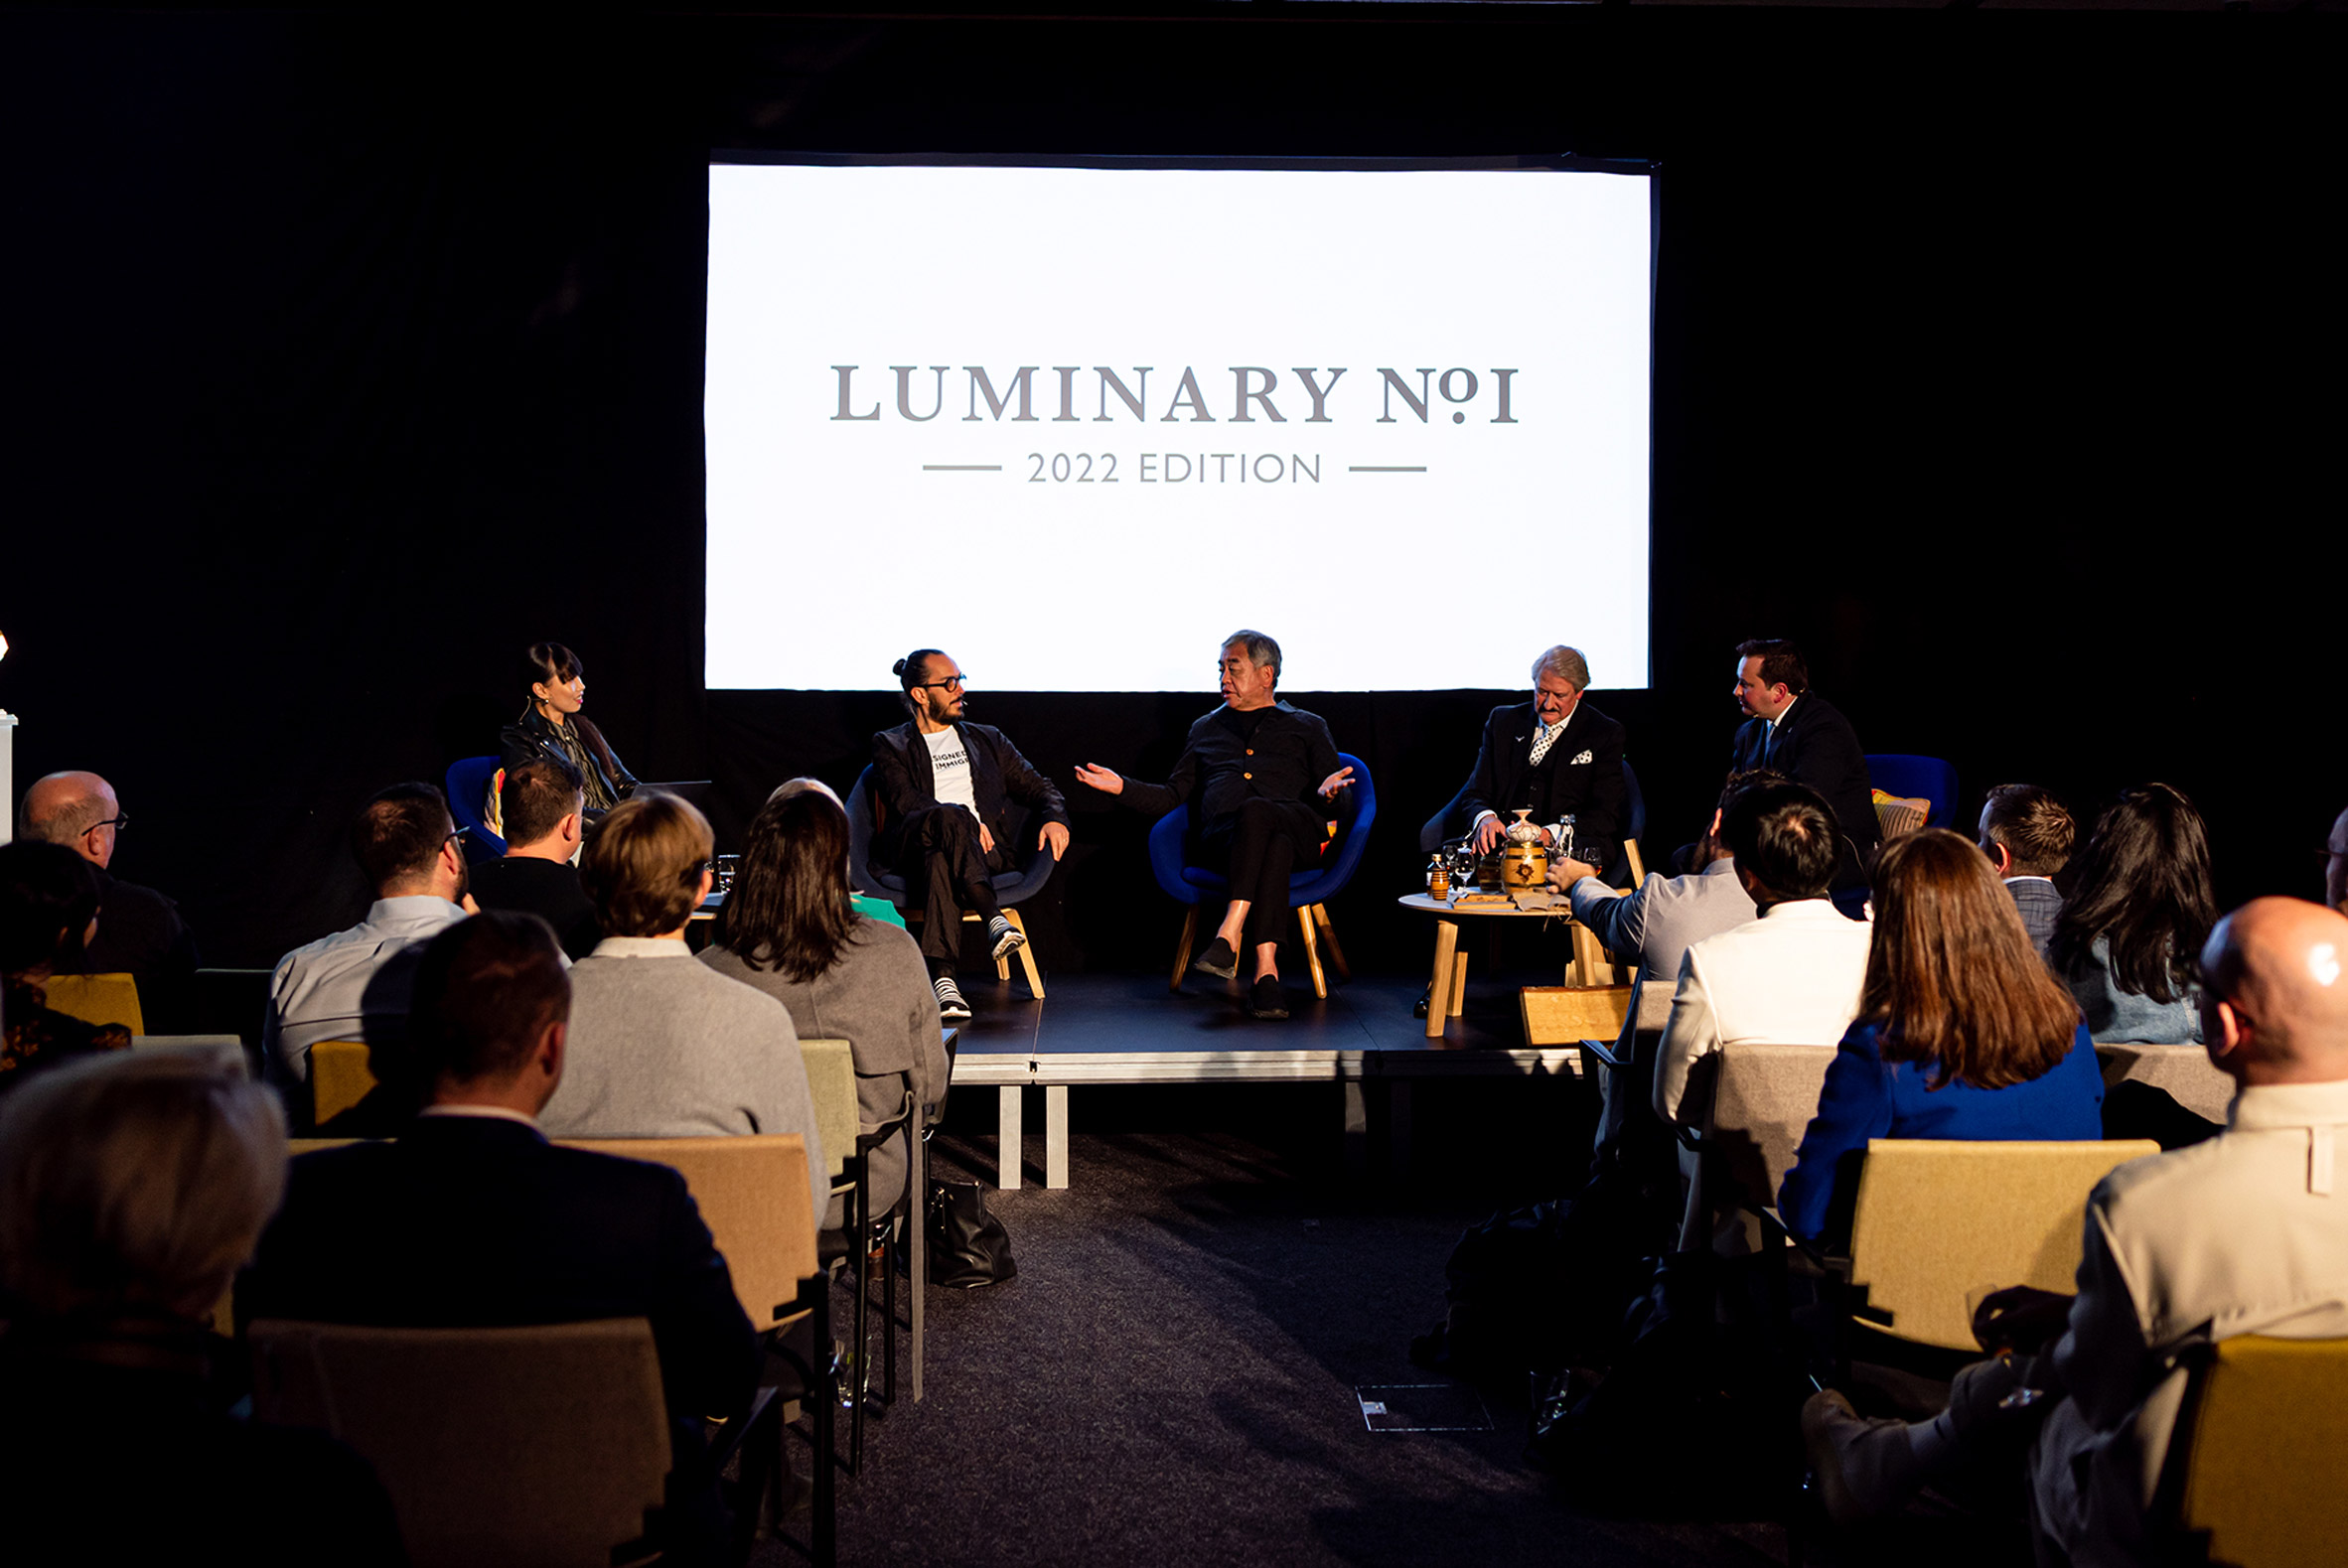 The Dalmore talk at V&A Dundee with Kengo Kuma, Maurizio Mucciola, Richard Paterson and Gregg Glass